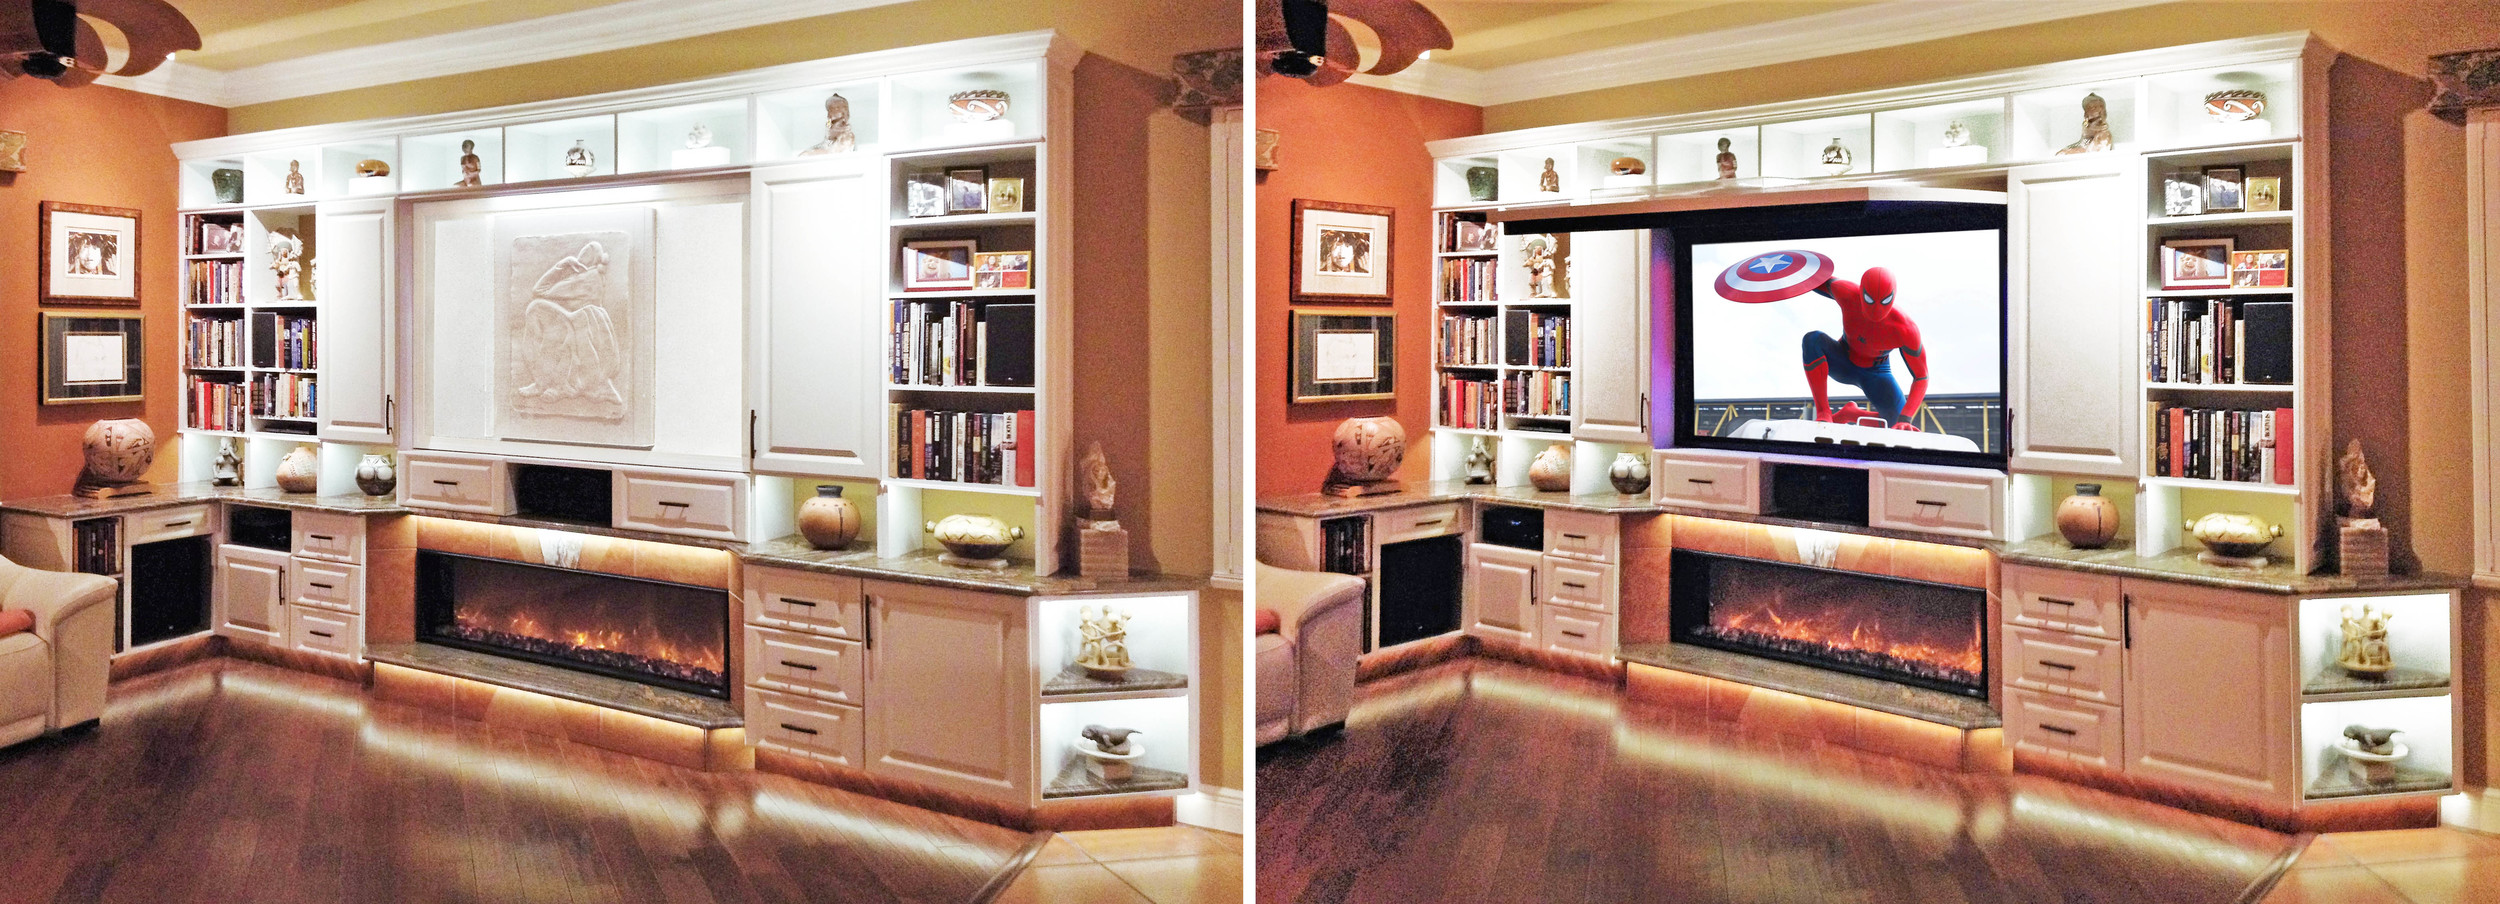 frame-tv-hidden-behind-art-mirror-tv-cover-ups-decor-ideas-side-by-side.jpg